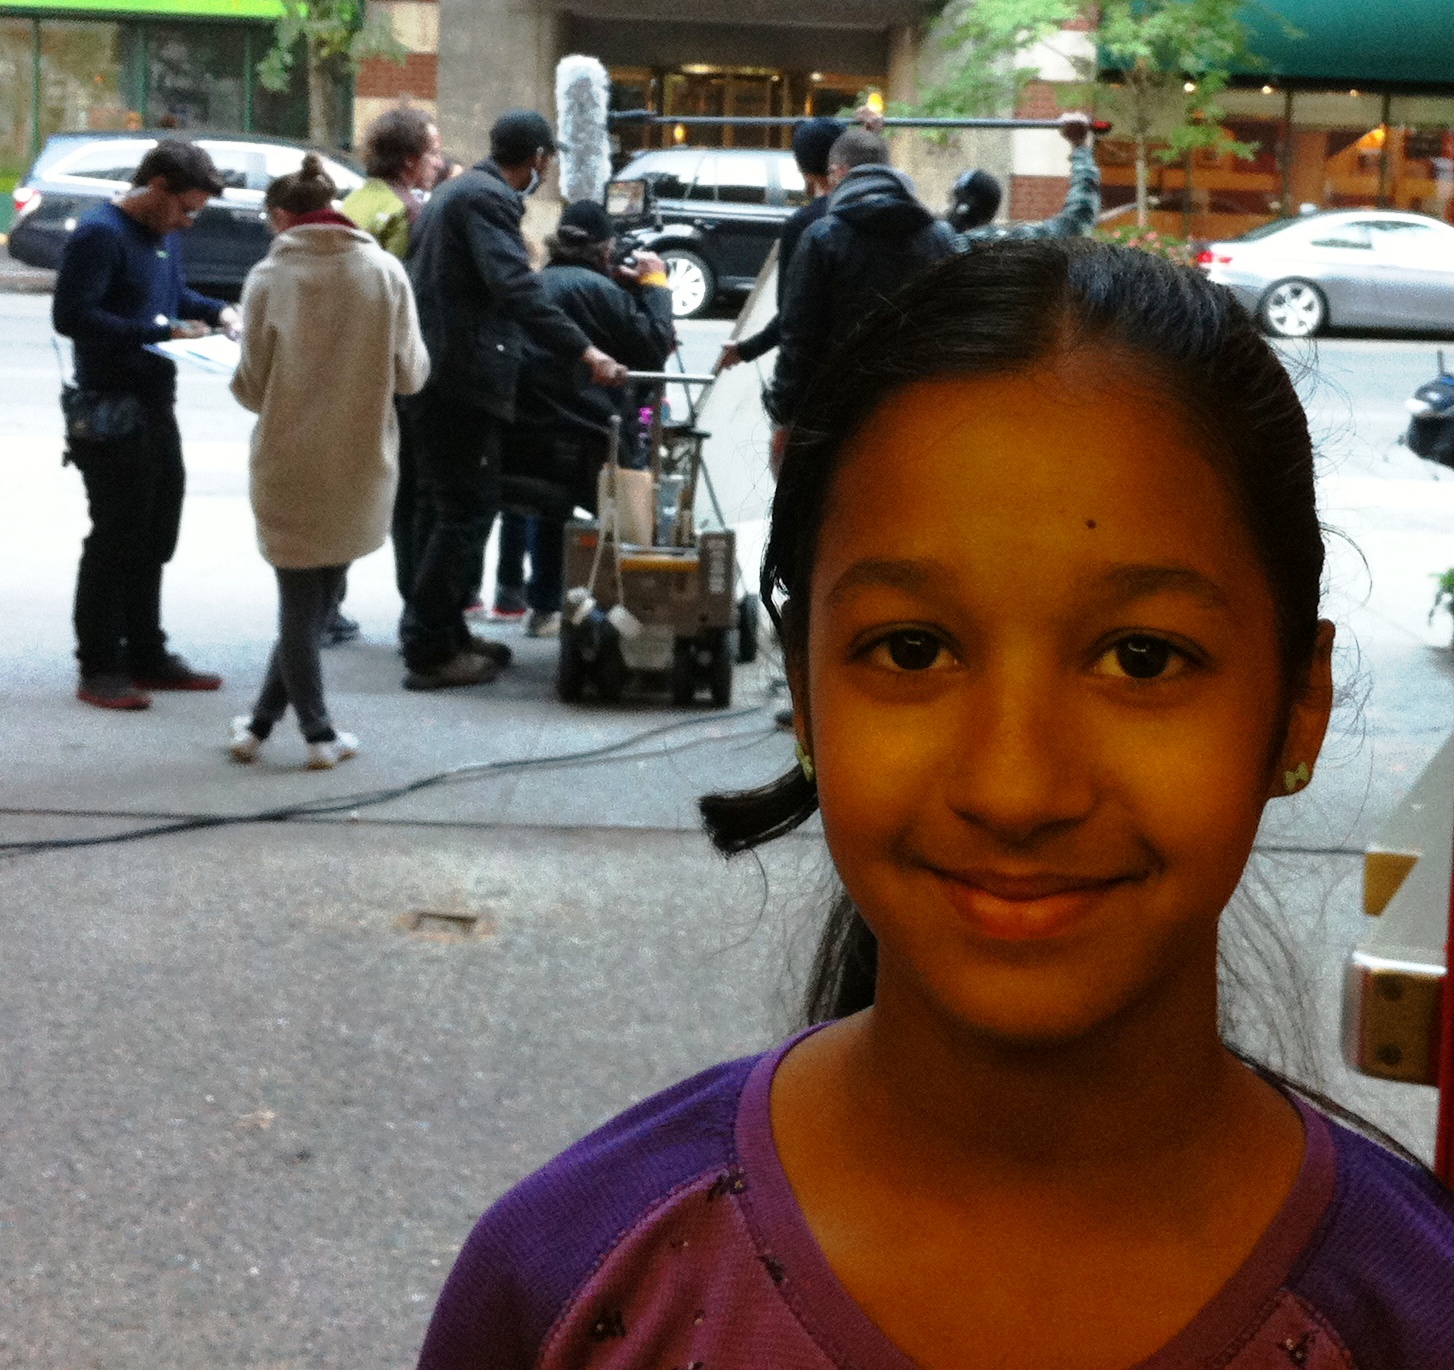 Chetna on set of feature film 'Kid Witness' as school child, starring Academy Award winner Susan Sarandon.